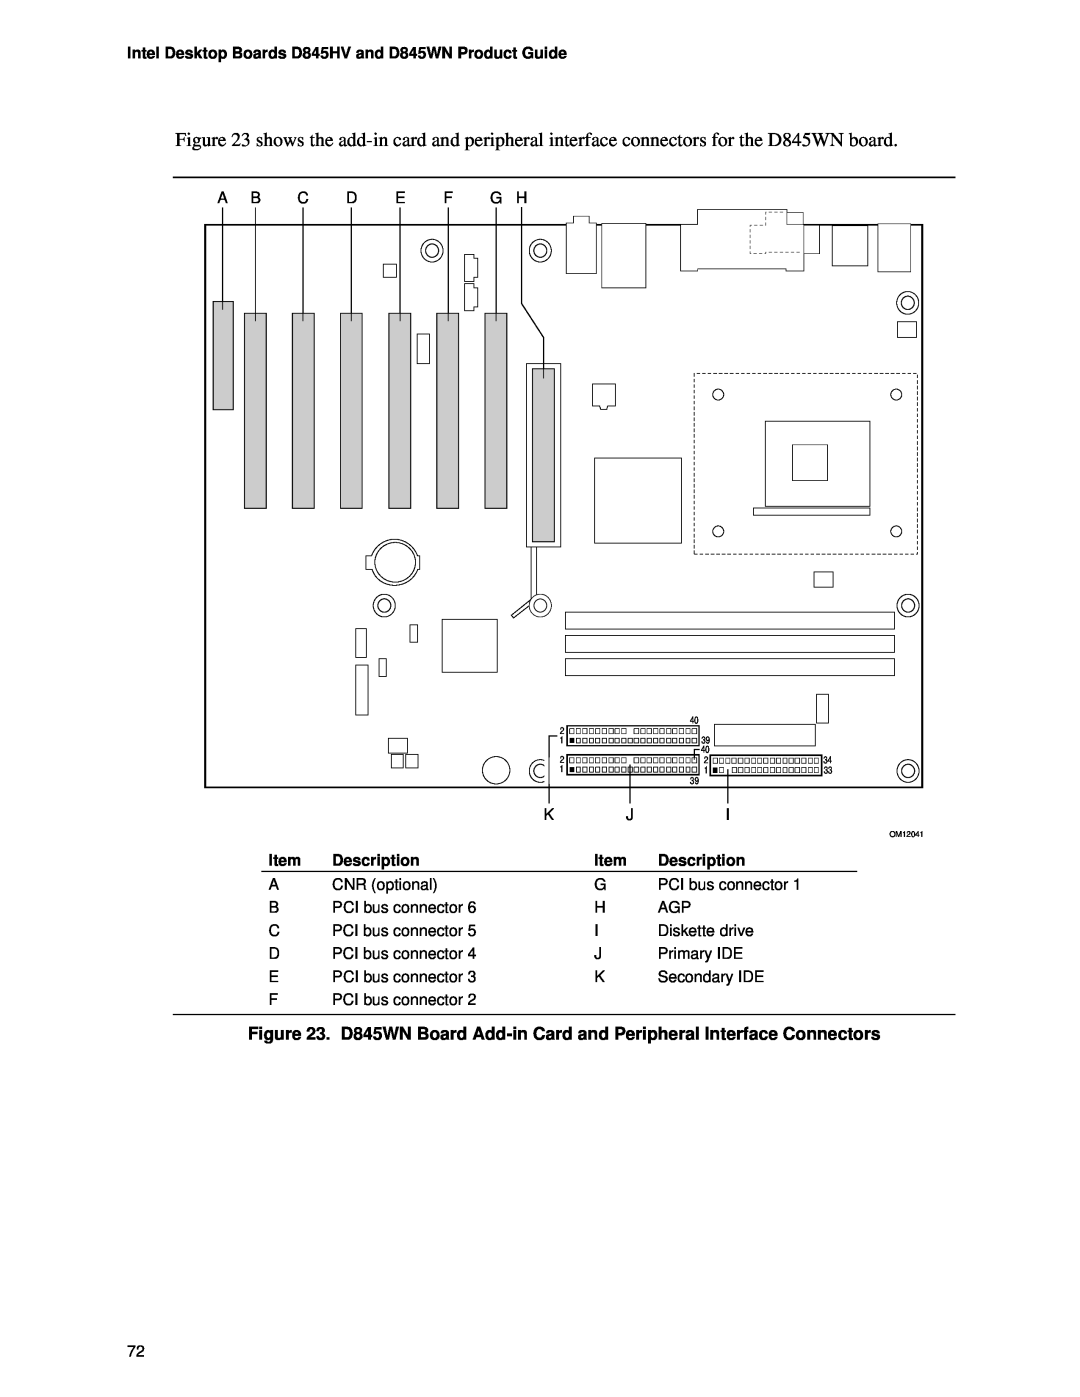 Intel manual Intel Desktop Boards D845HV and D845WN Product Guide, Description, OM12041 